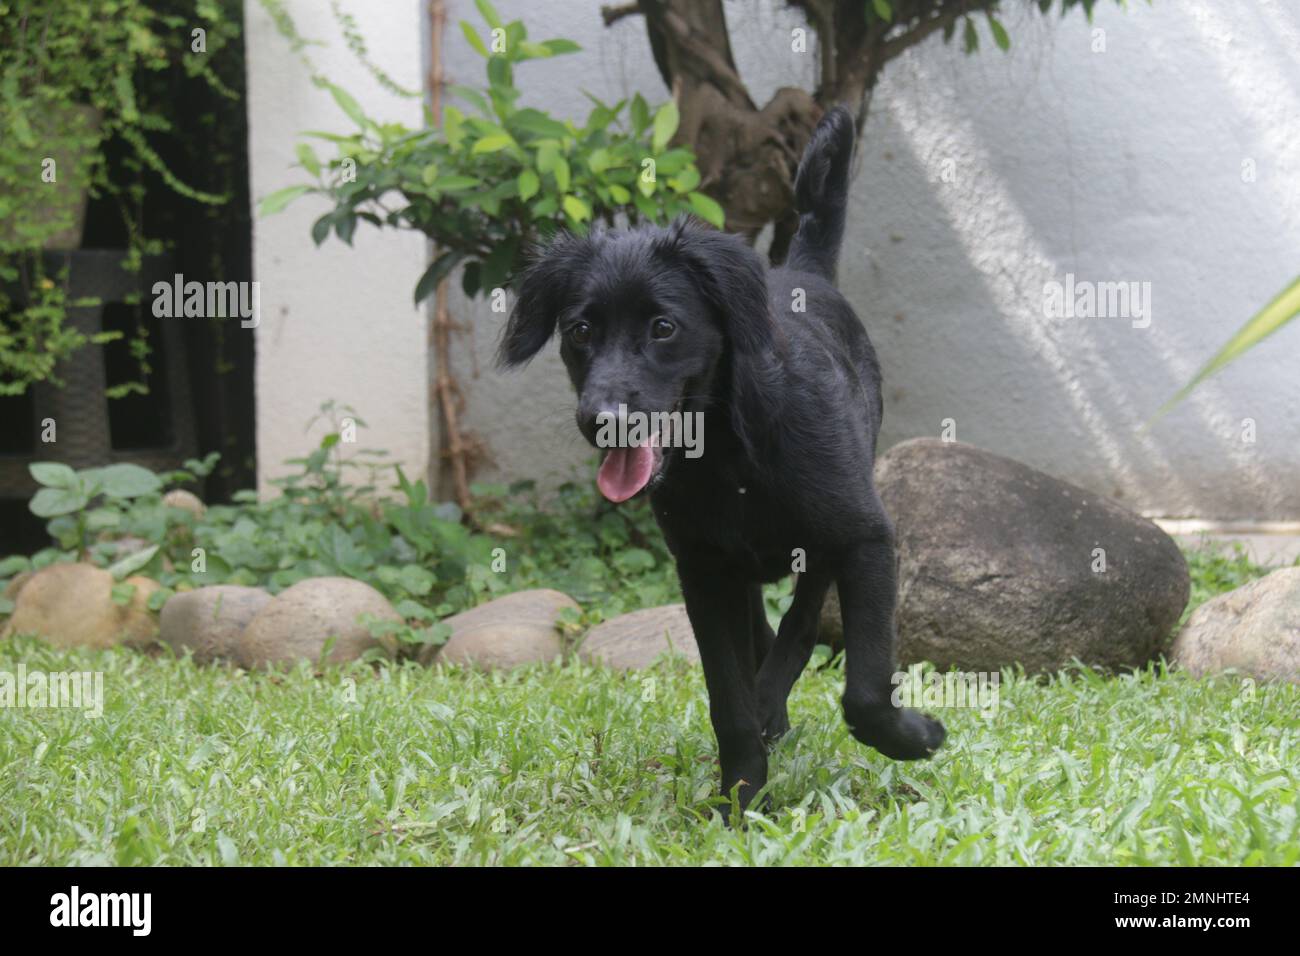 My pet Dogs, Labrador and Golden Retriever. Sri Lanka. Stock Photo